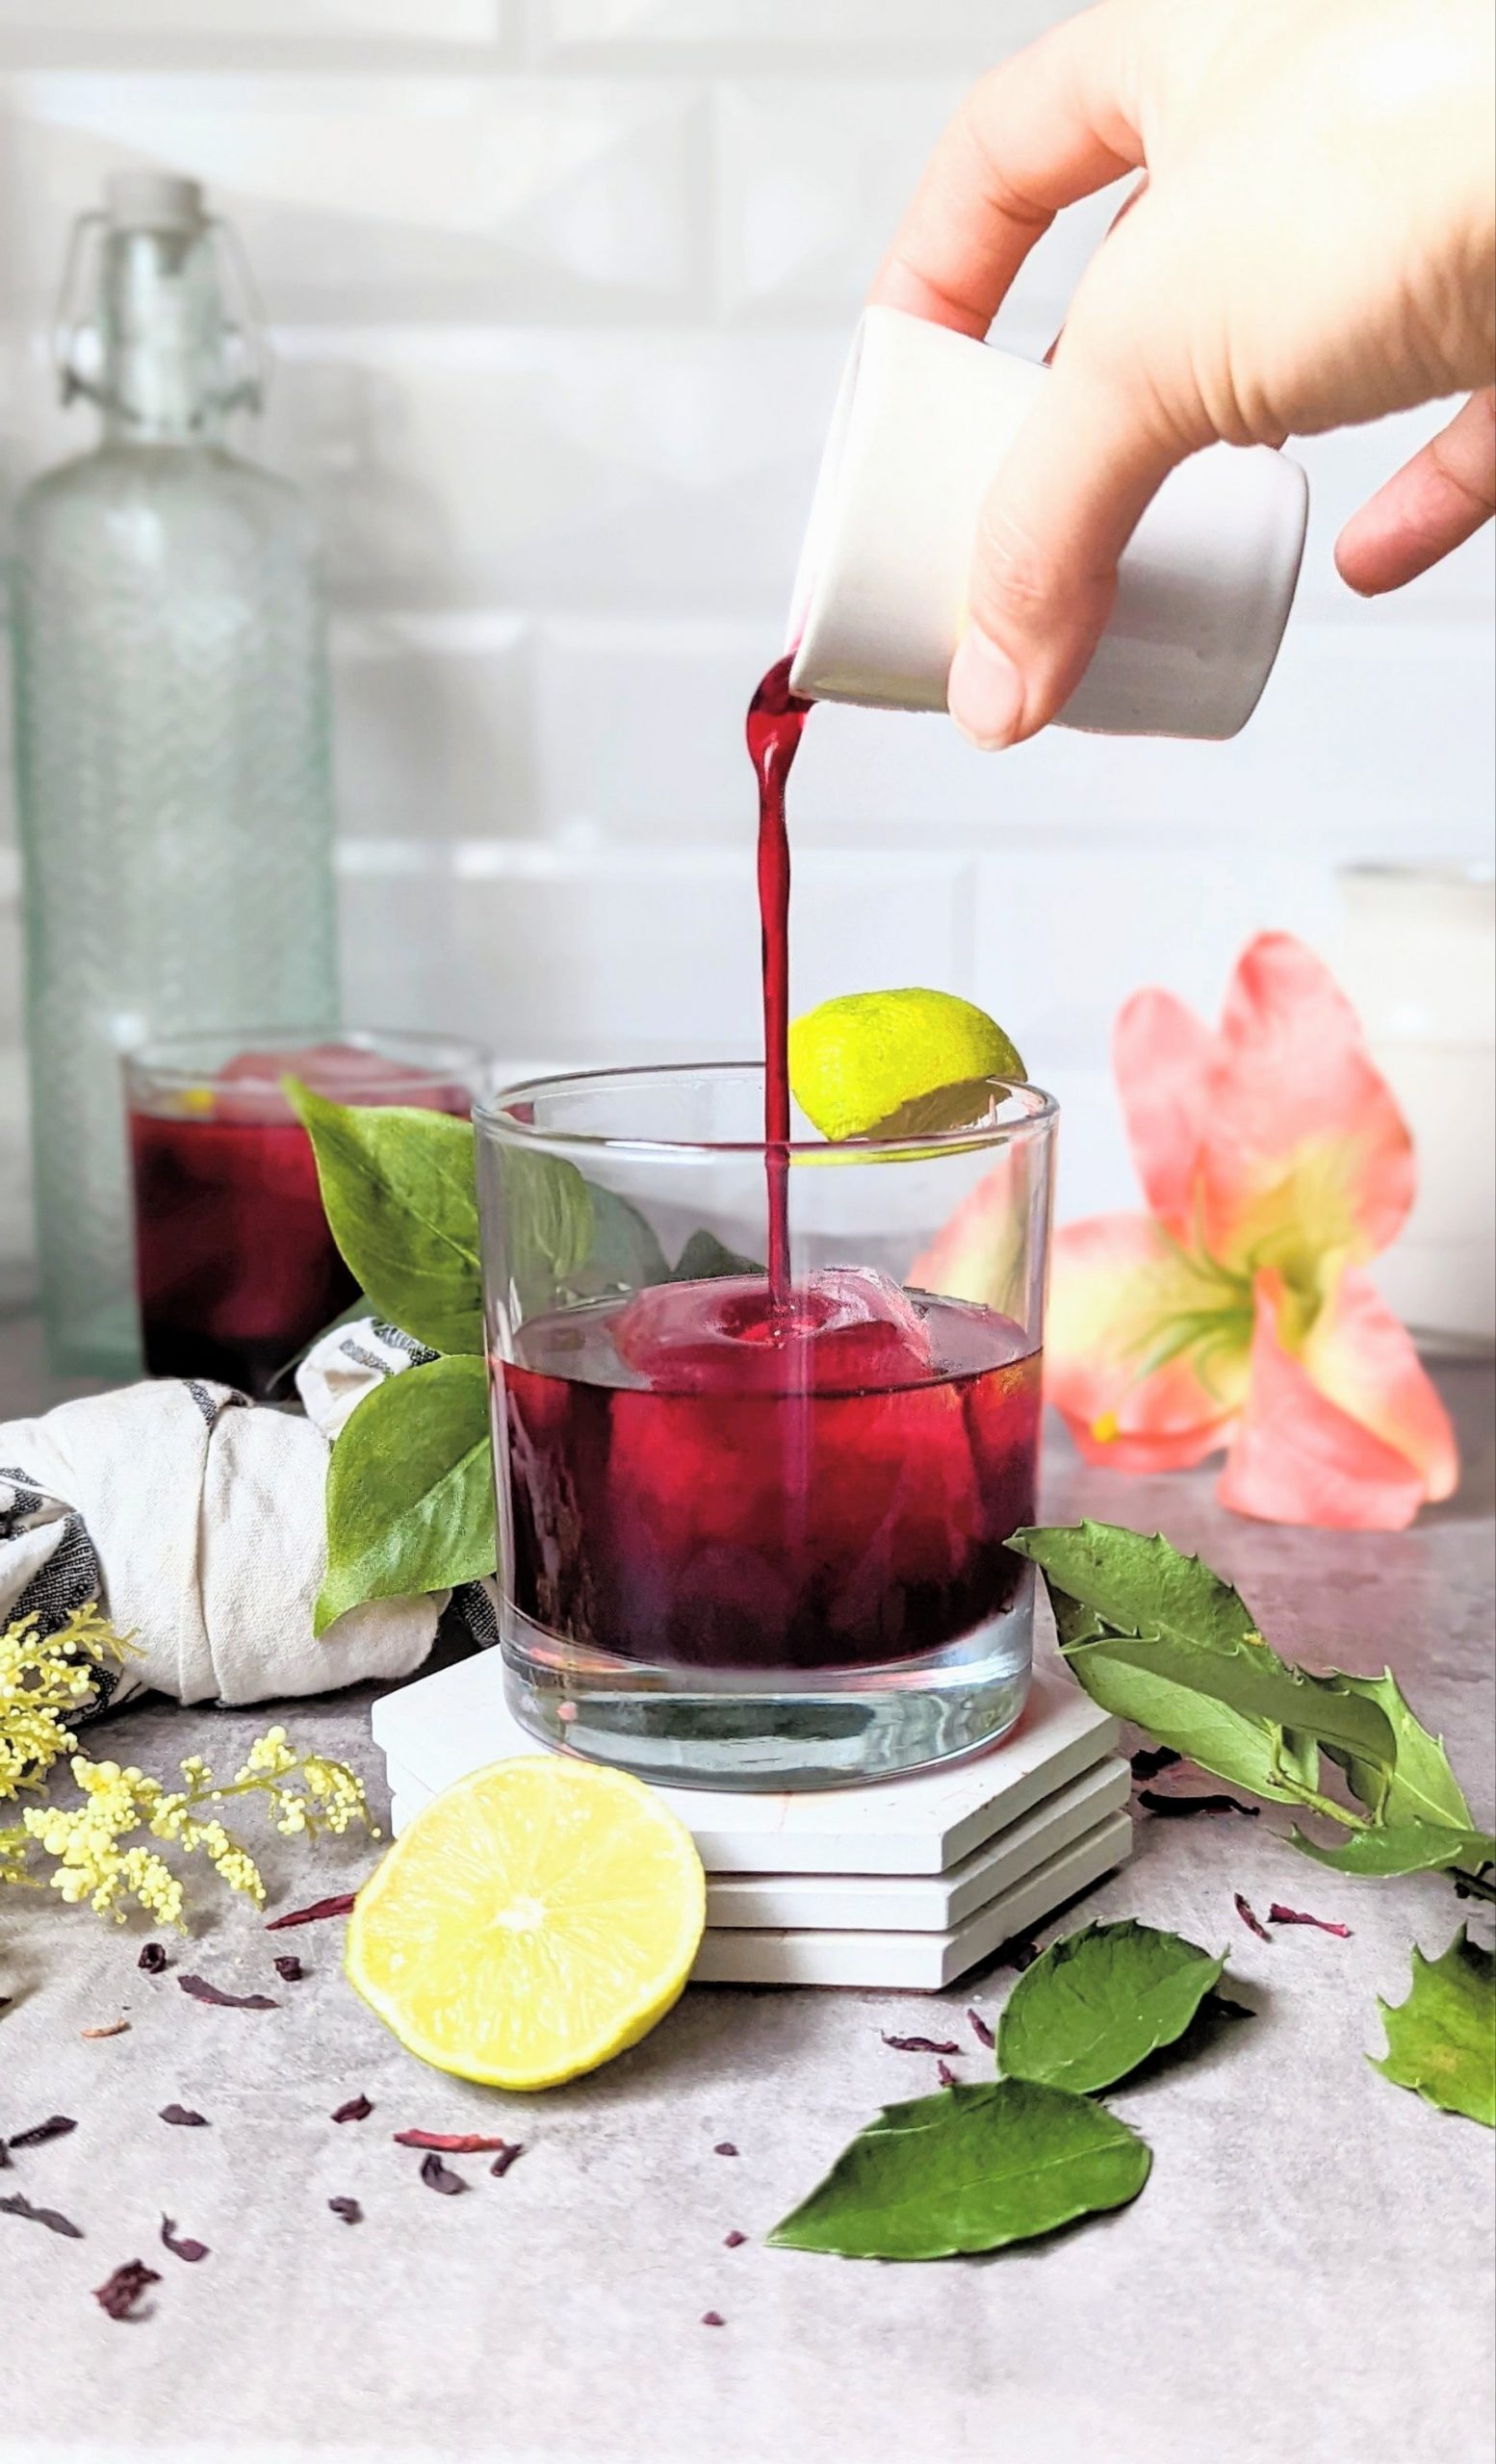 Hibiscus Margarita Recipe – A Refreshing Tequila Cocktail